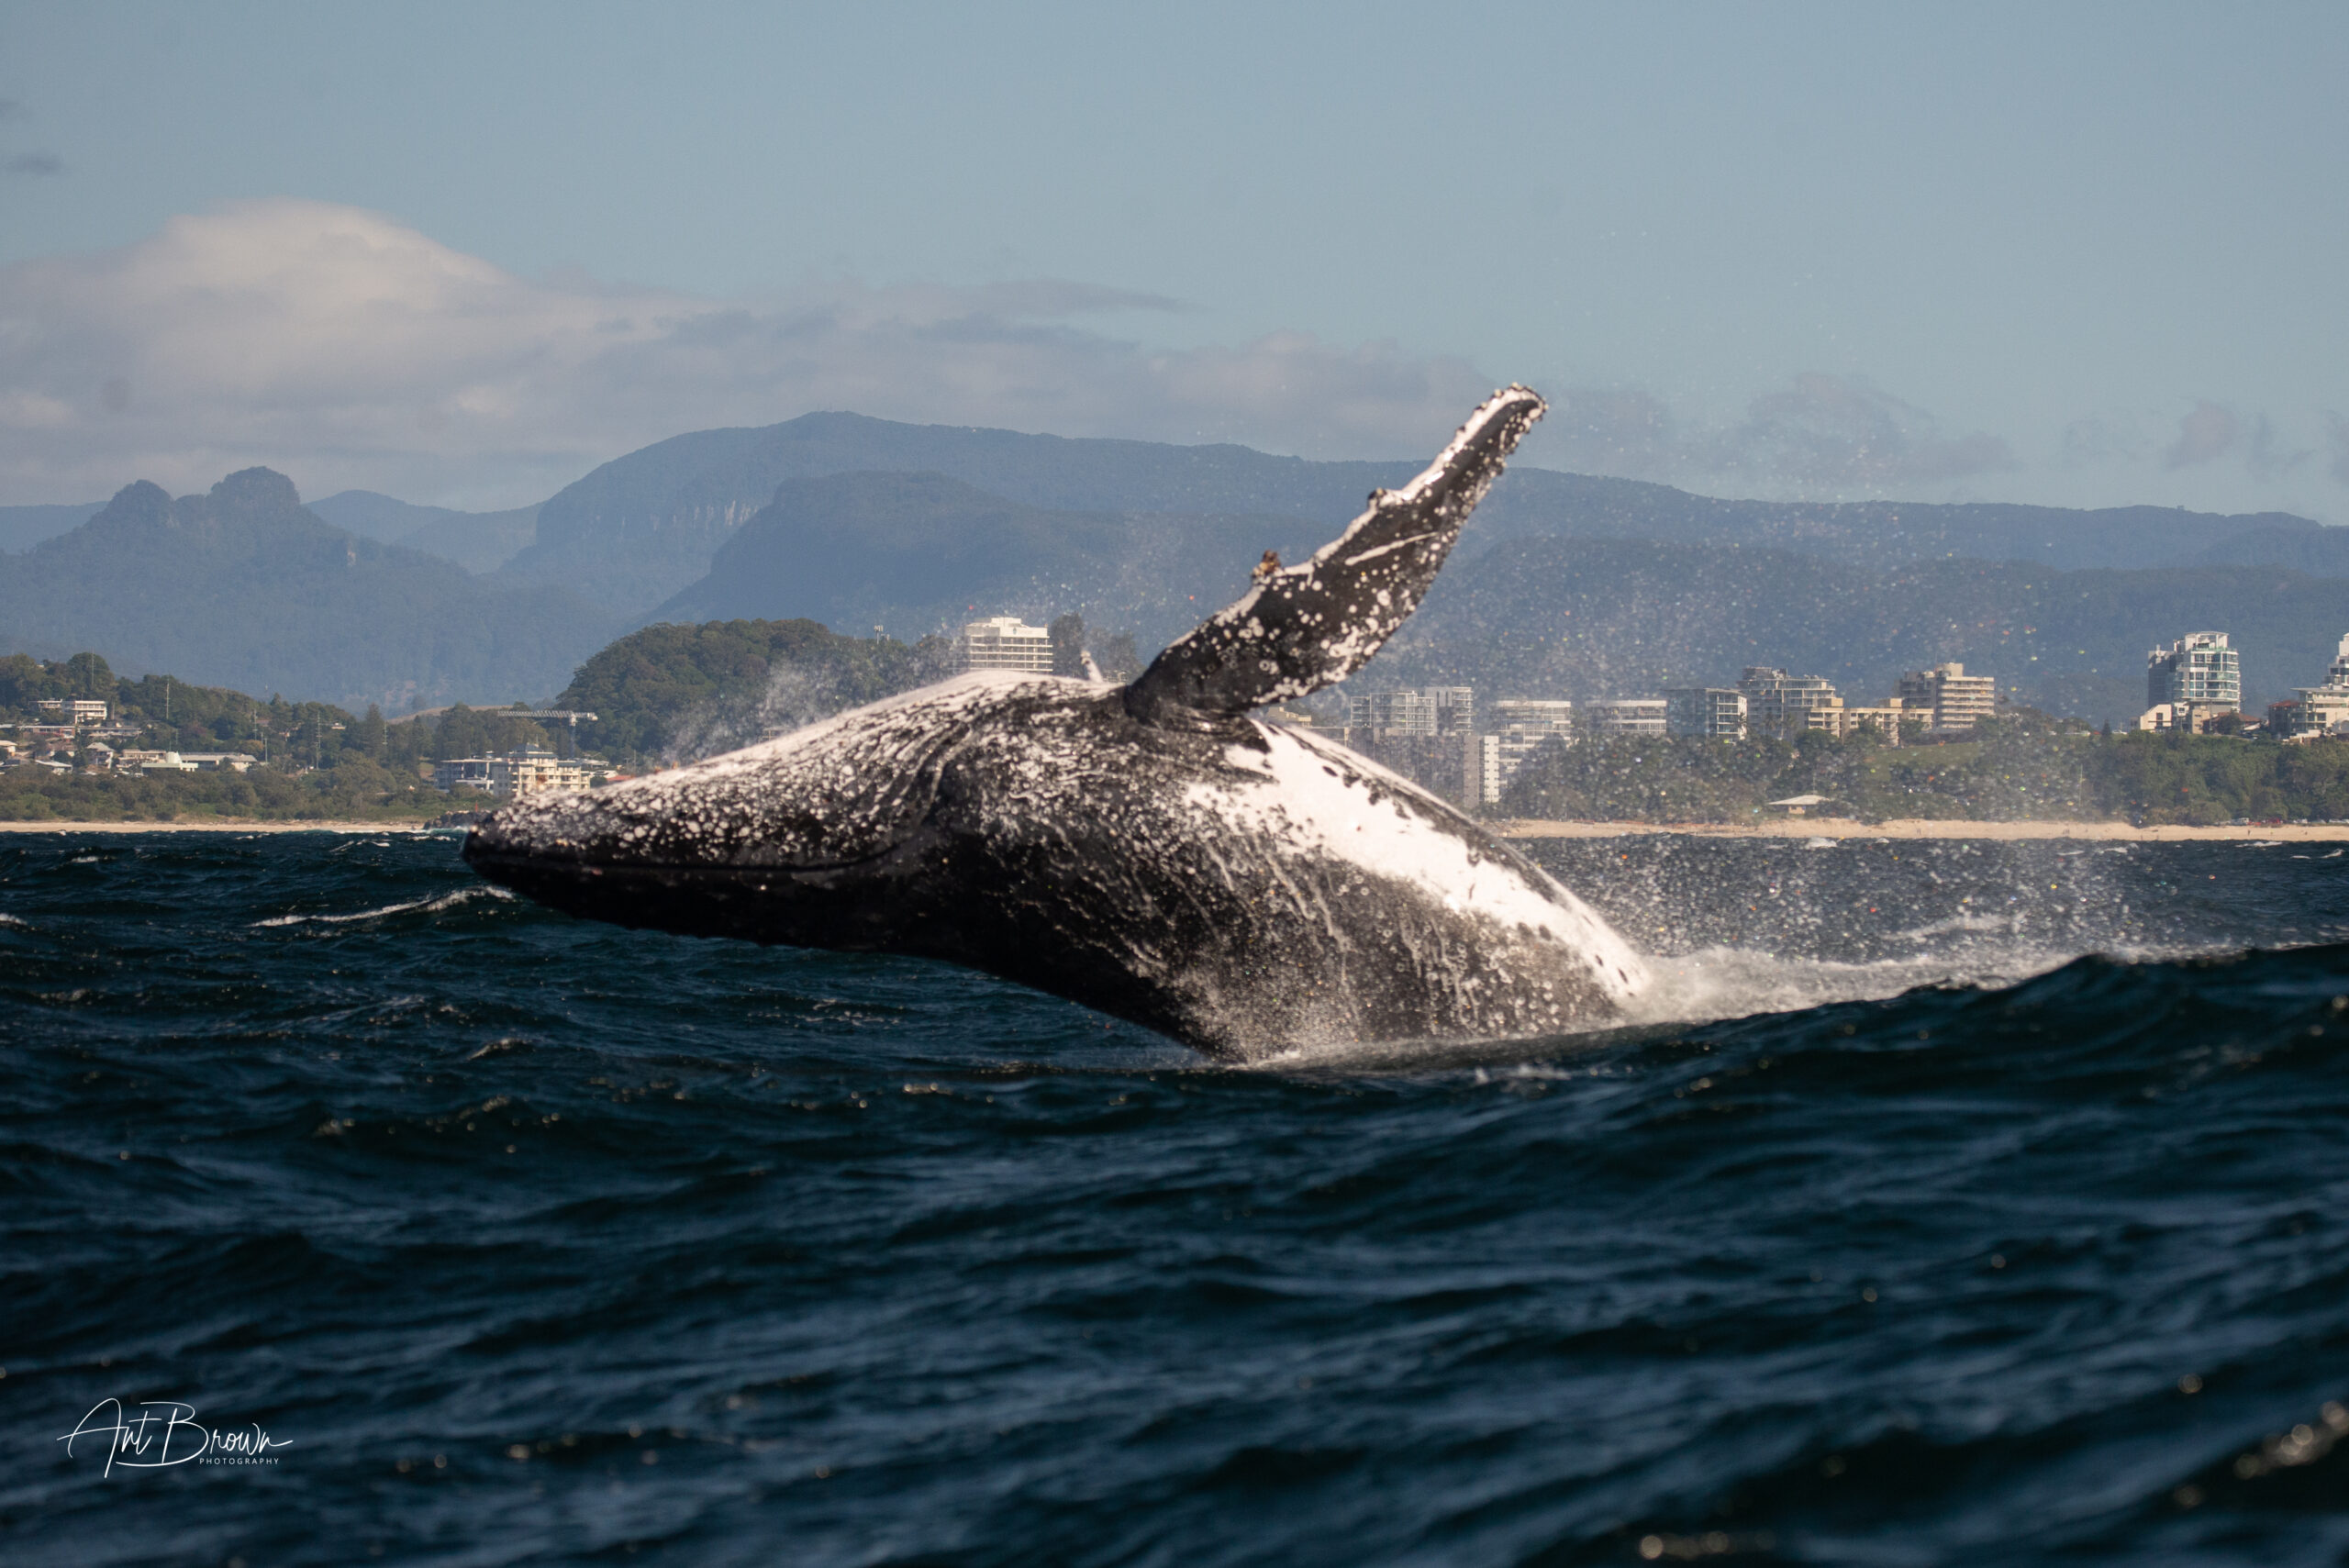 Safari-Style Whale Watching Gold Coast